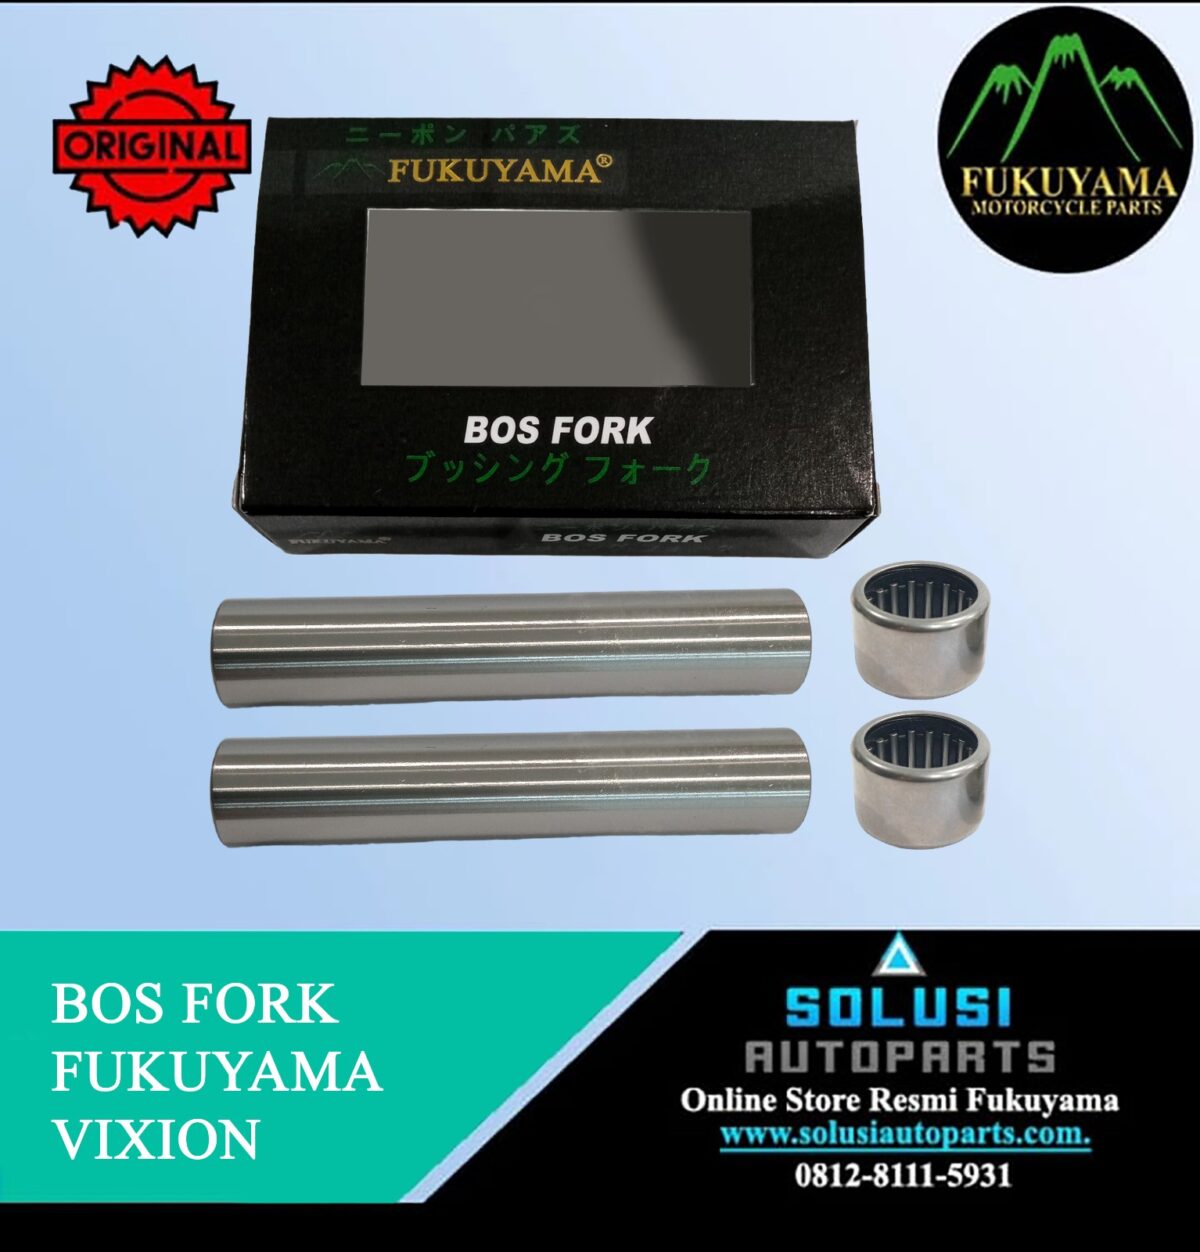 fukuyama | bos fork